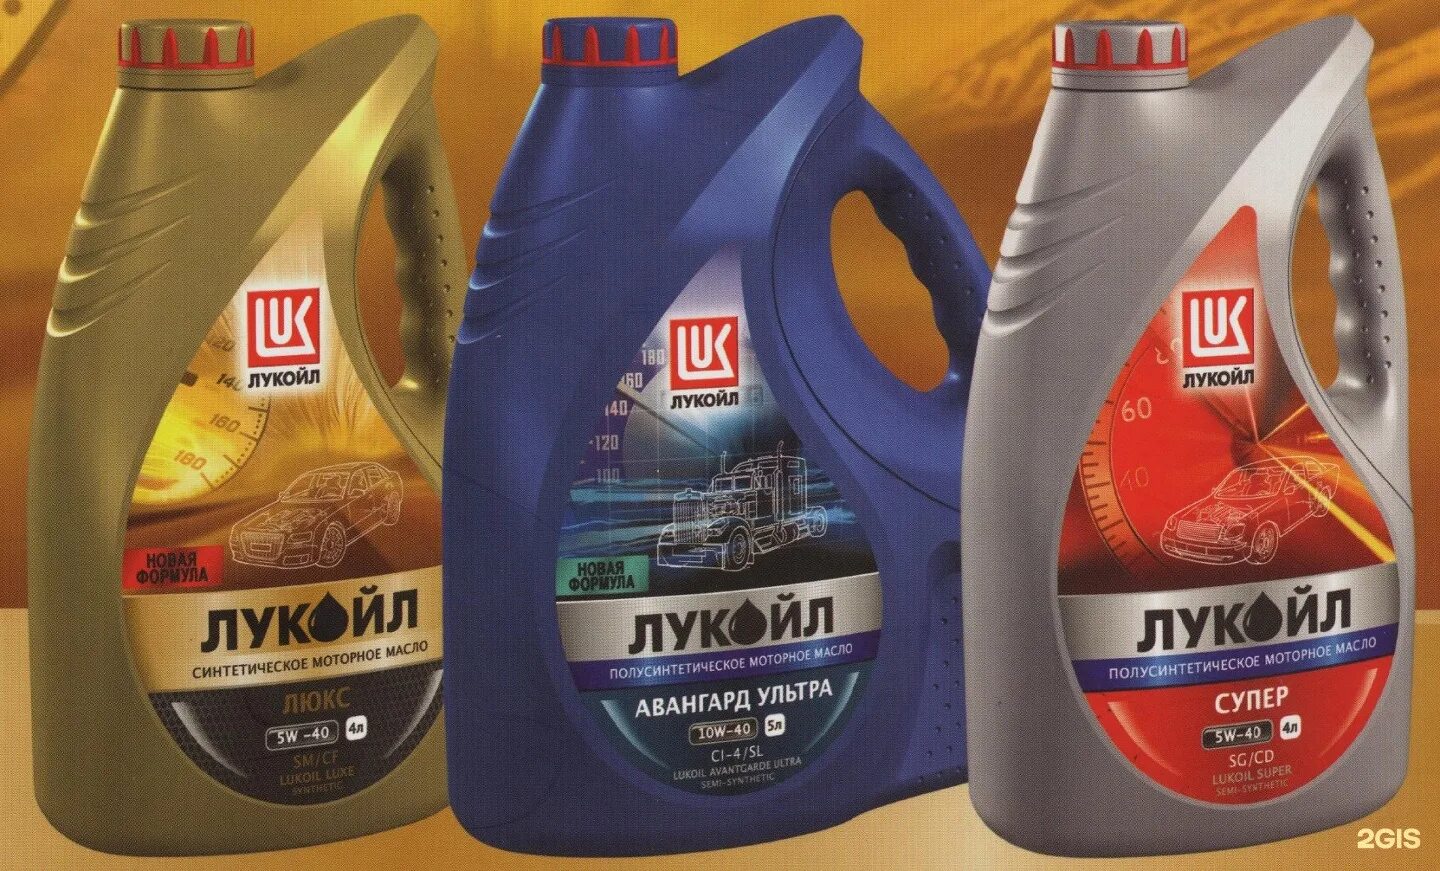 Масло лукойл производитель. Lukoil масло. Лукойл продукция. Моторное масло Лукойл реклама. Лукойл масла баннер.